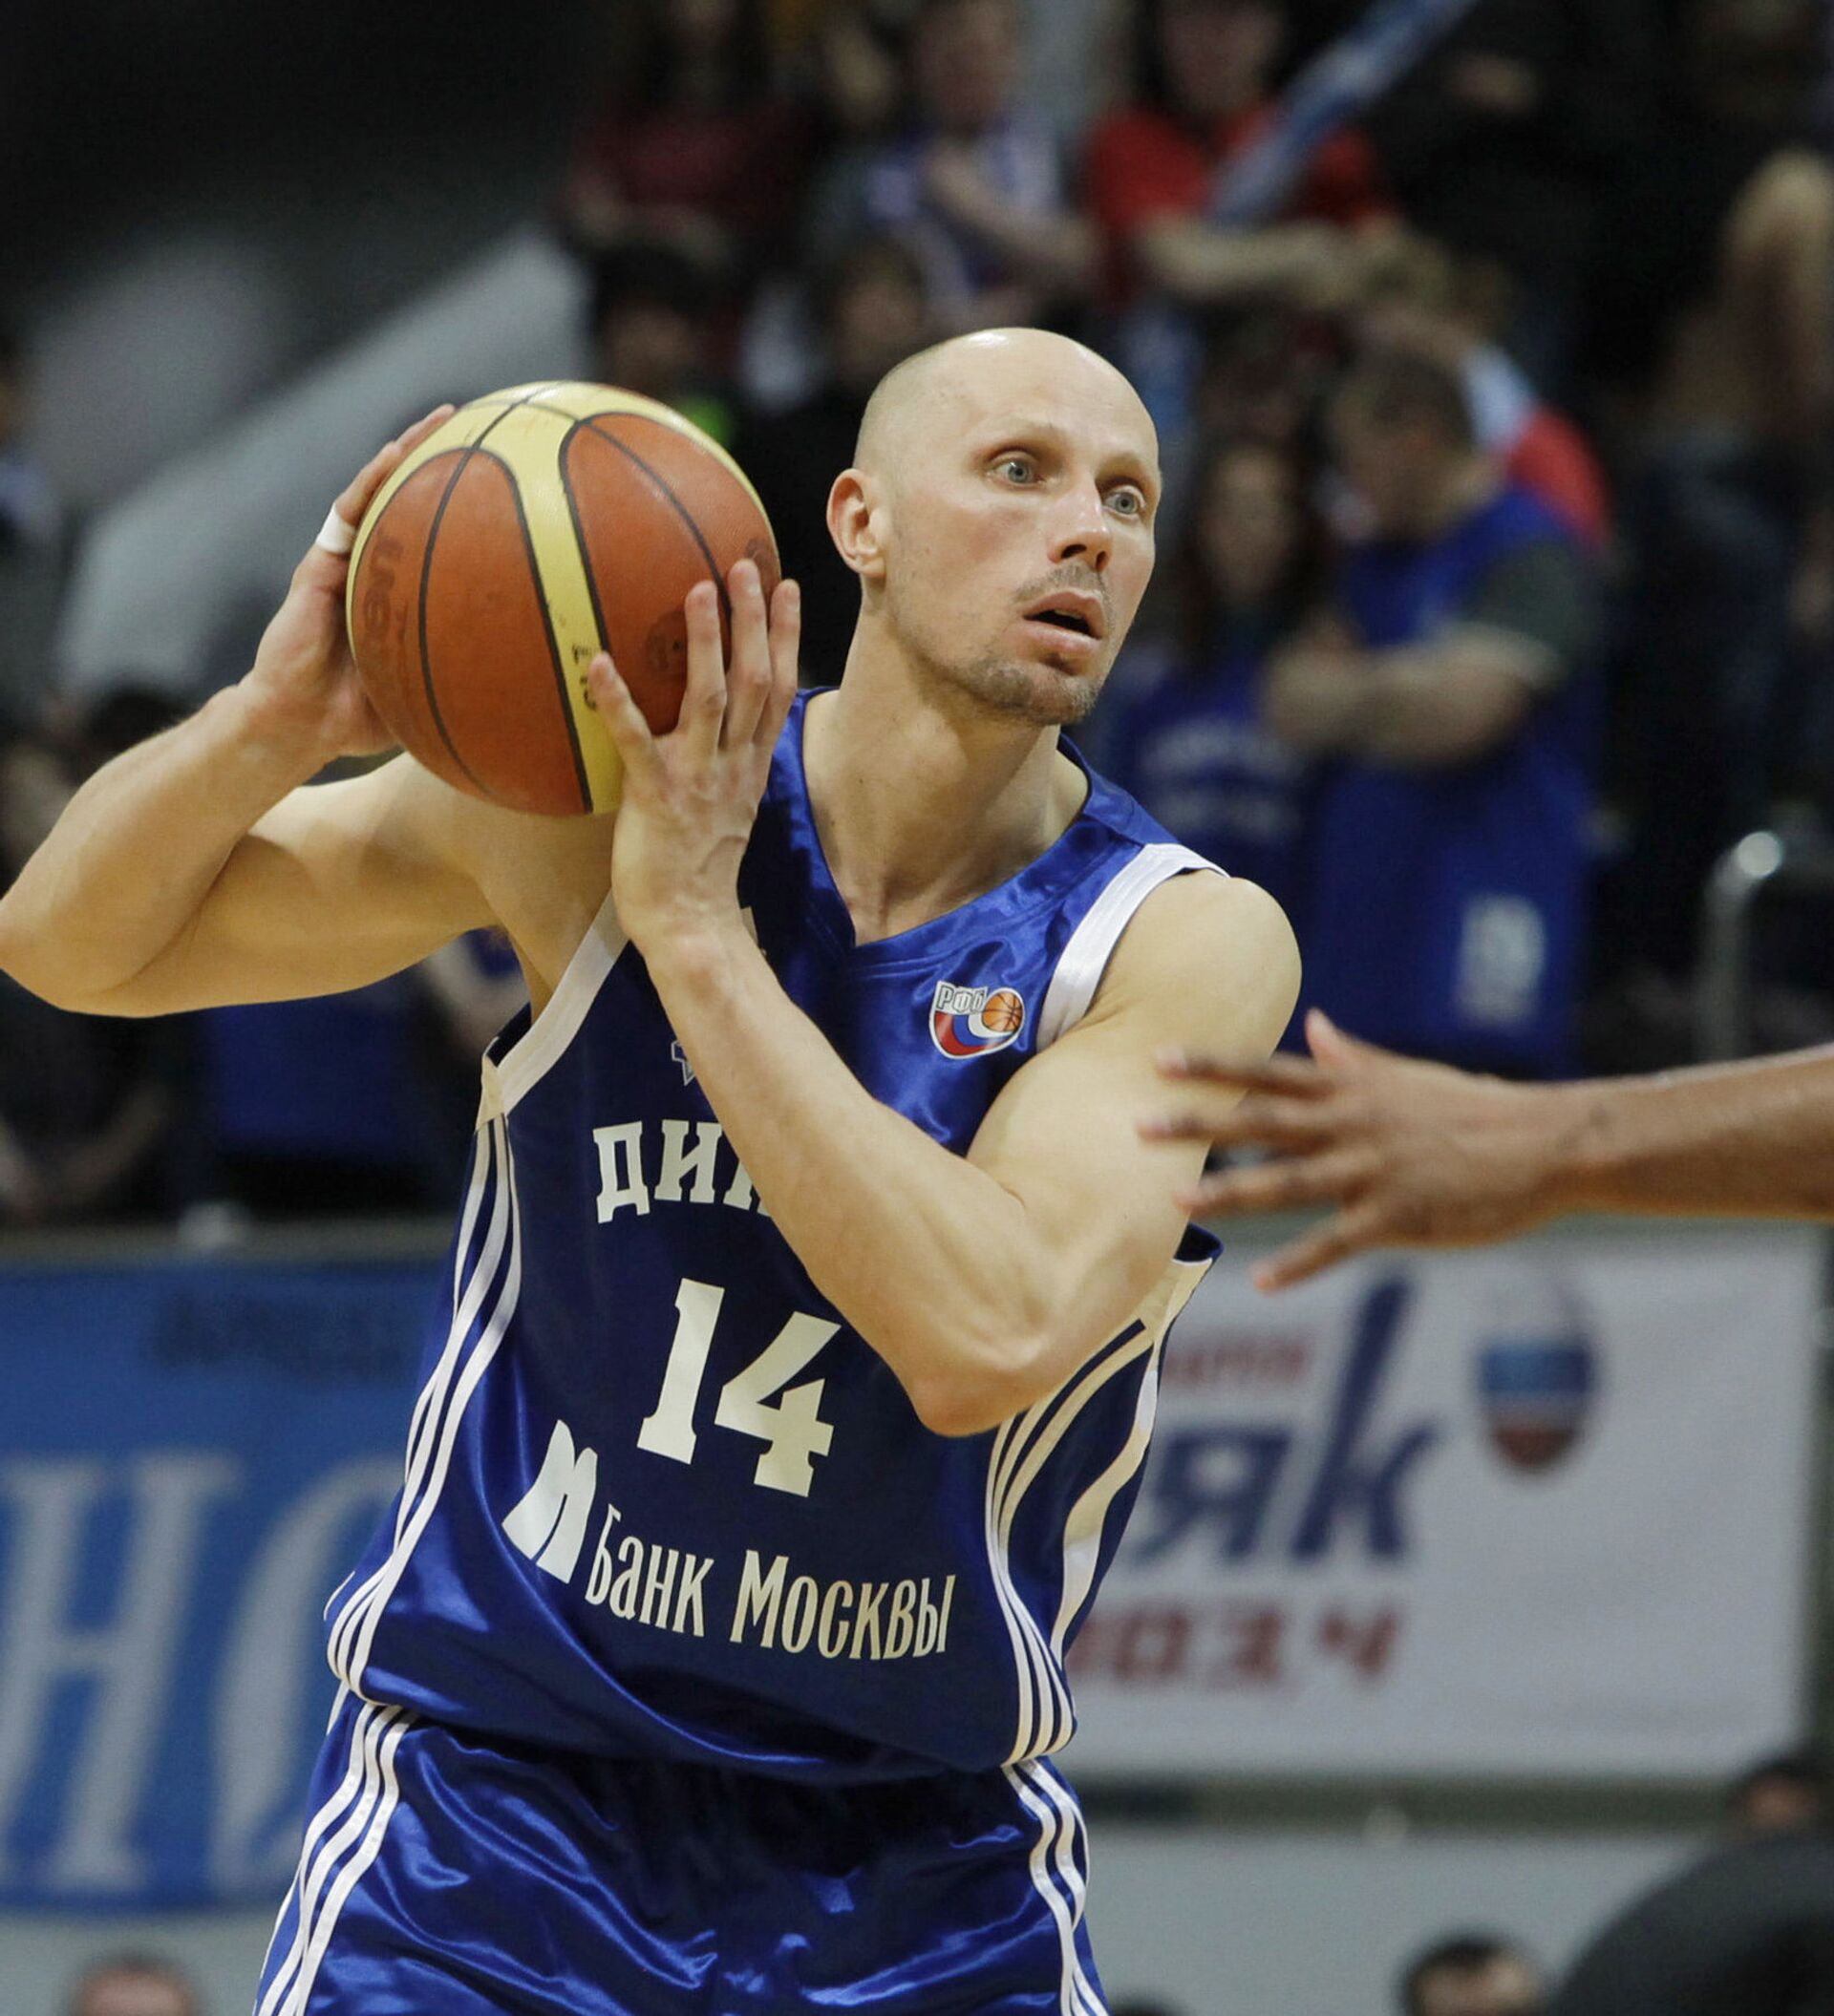 Сайт российской федерации баскетбола. Ткаченко баскетболист.